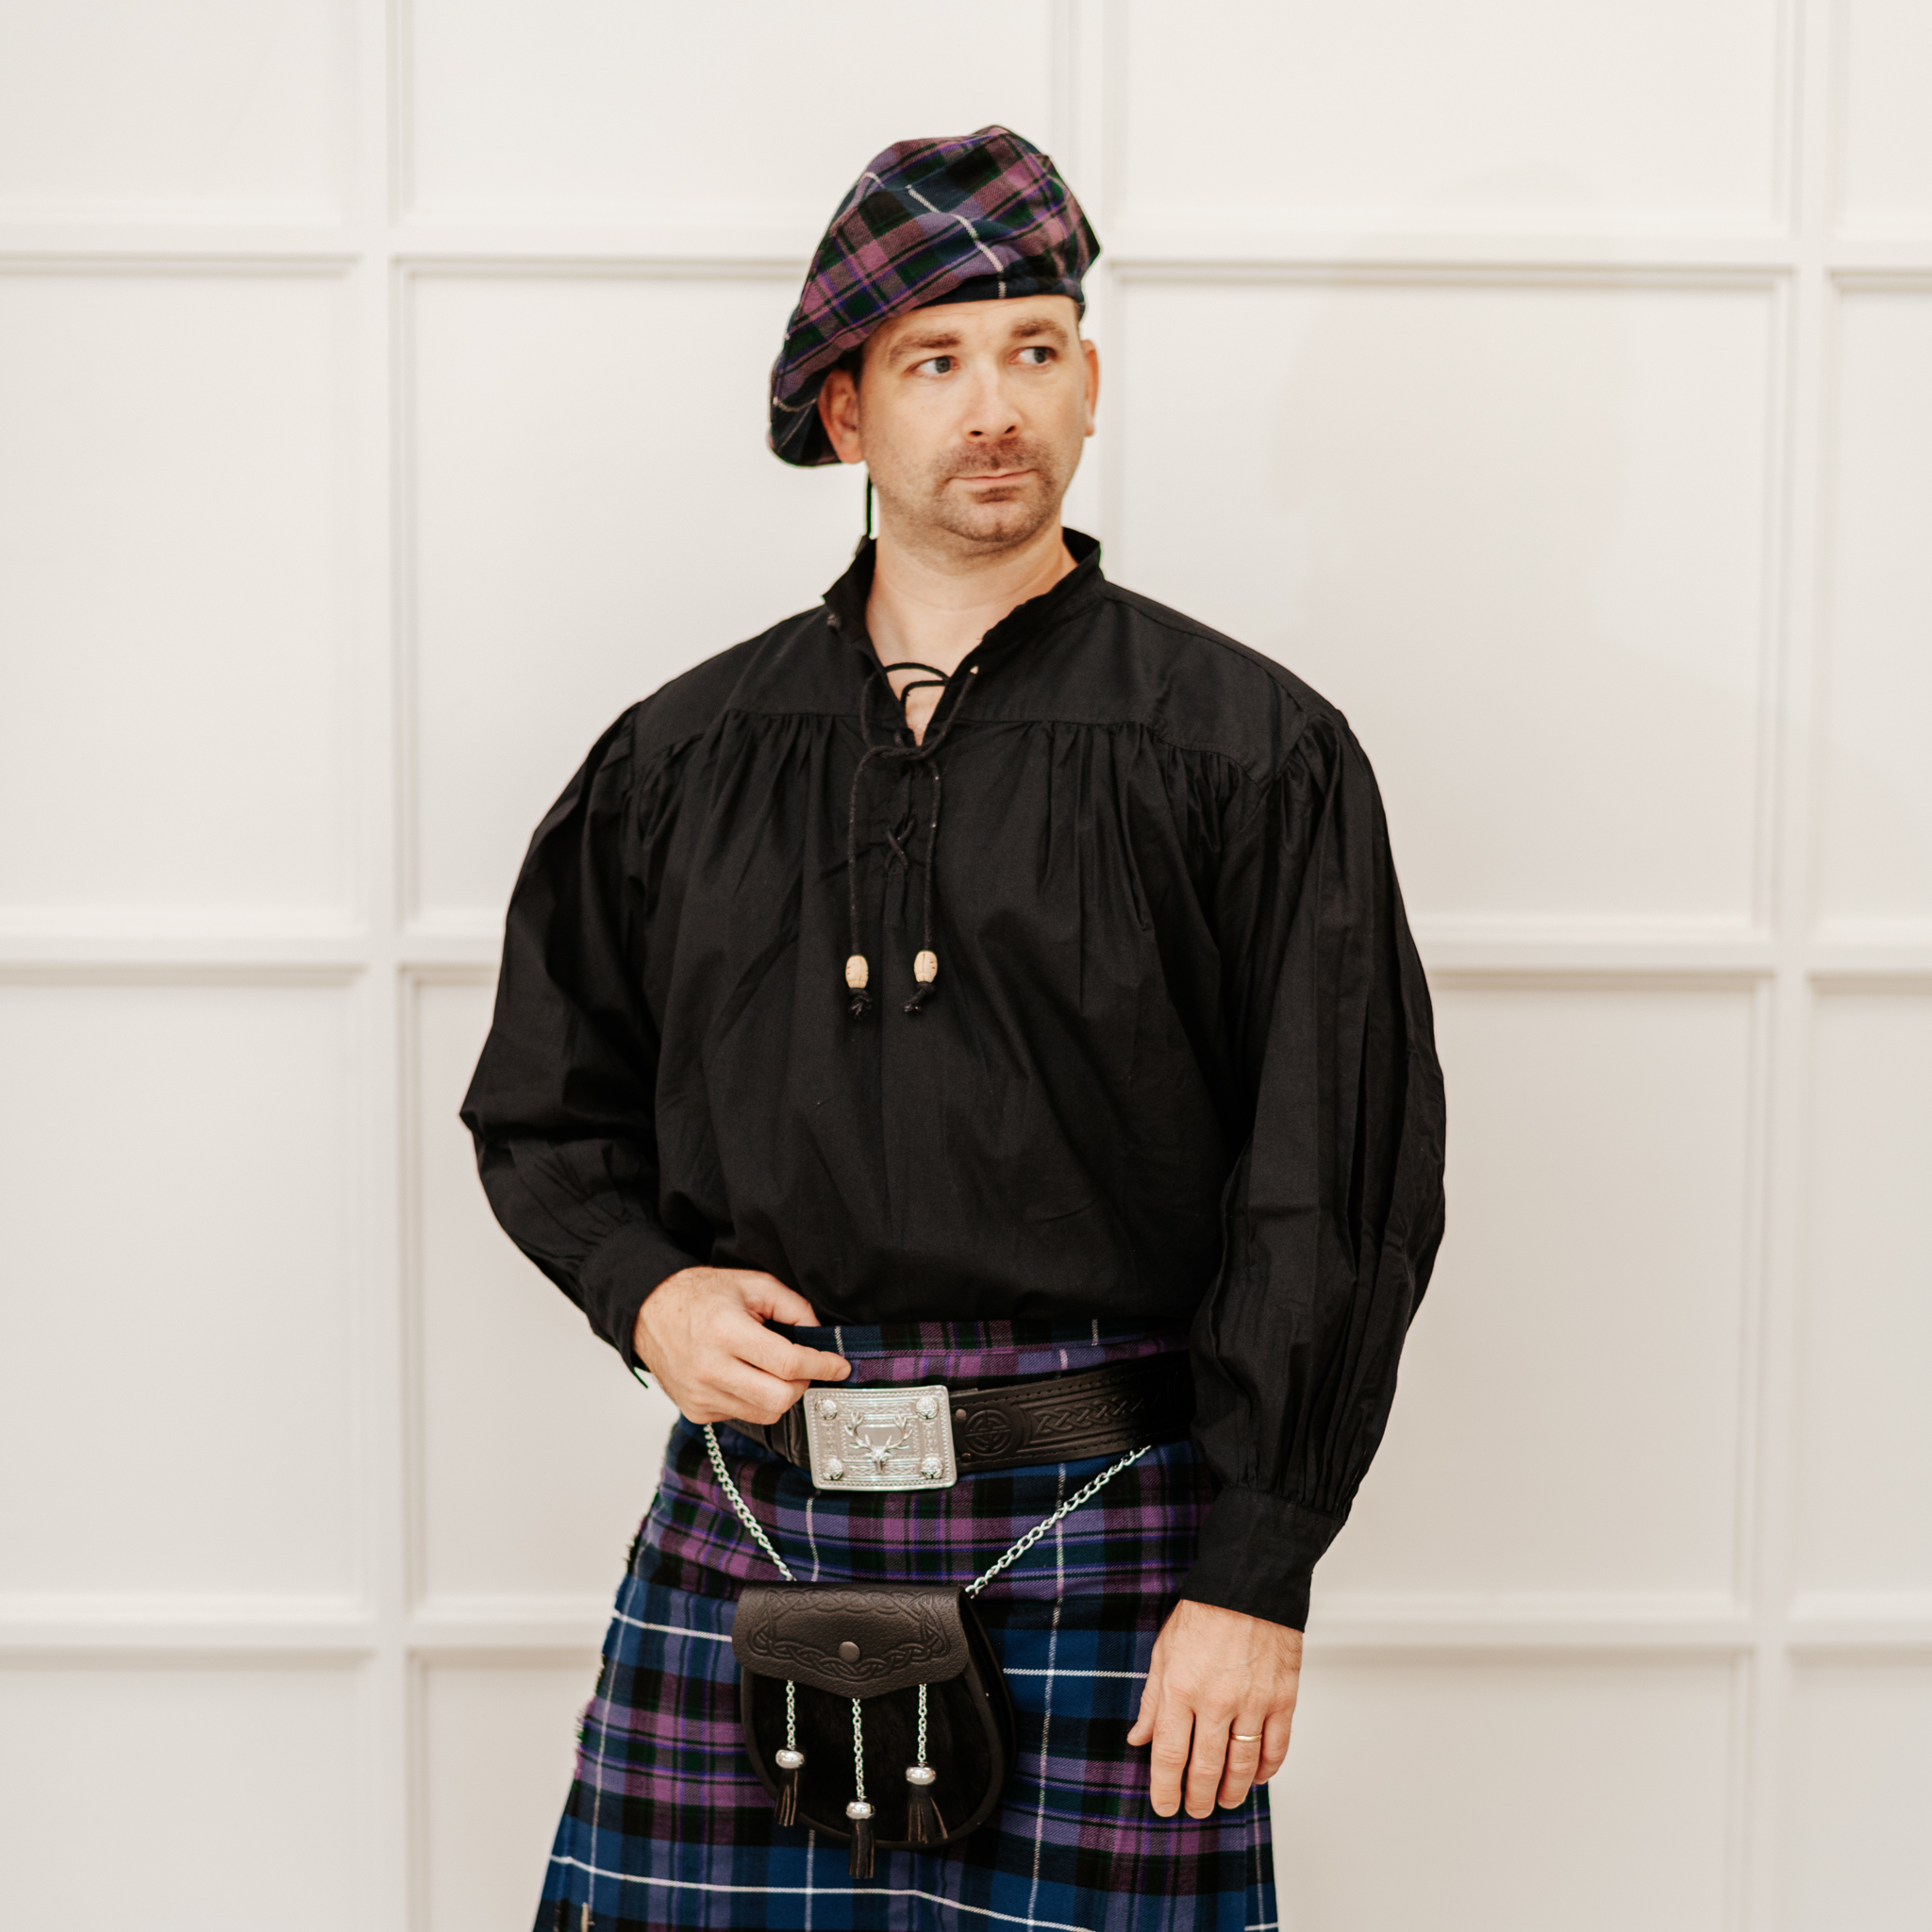 Cusco slave Dislike Rustic Historic Highland Lace-Up Kilt Shirt Made With Sturdy Cotton